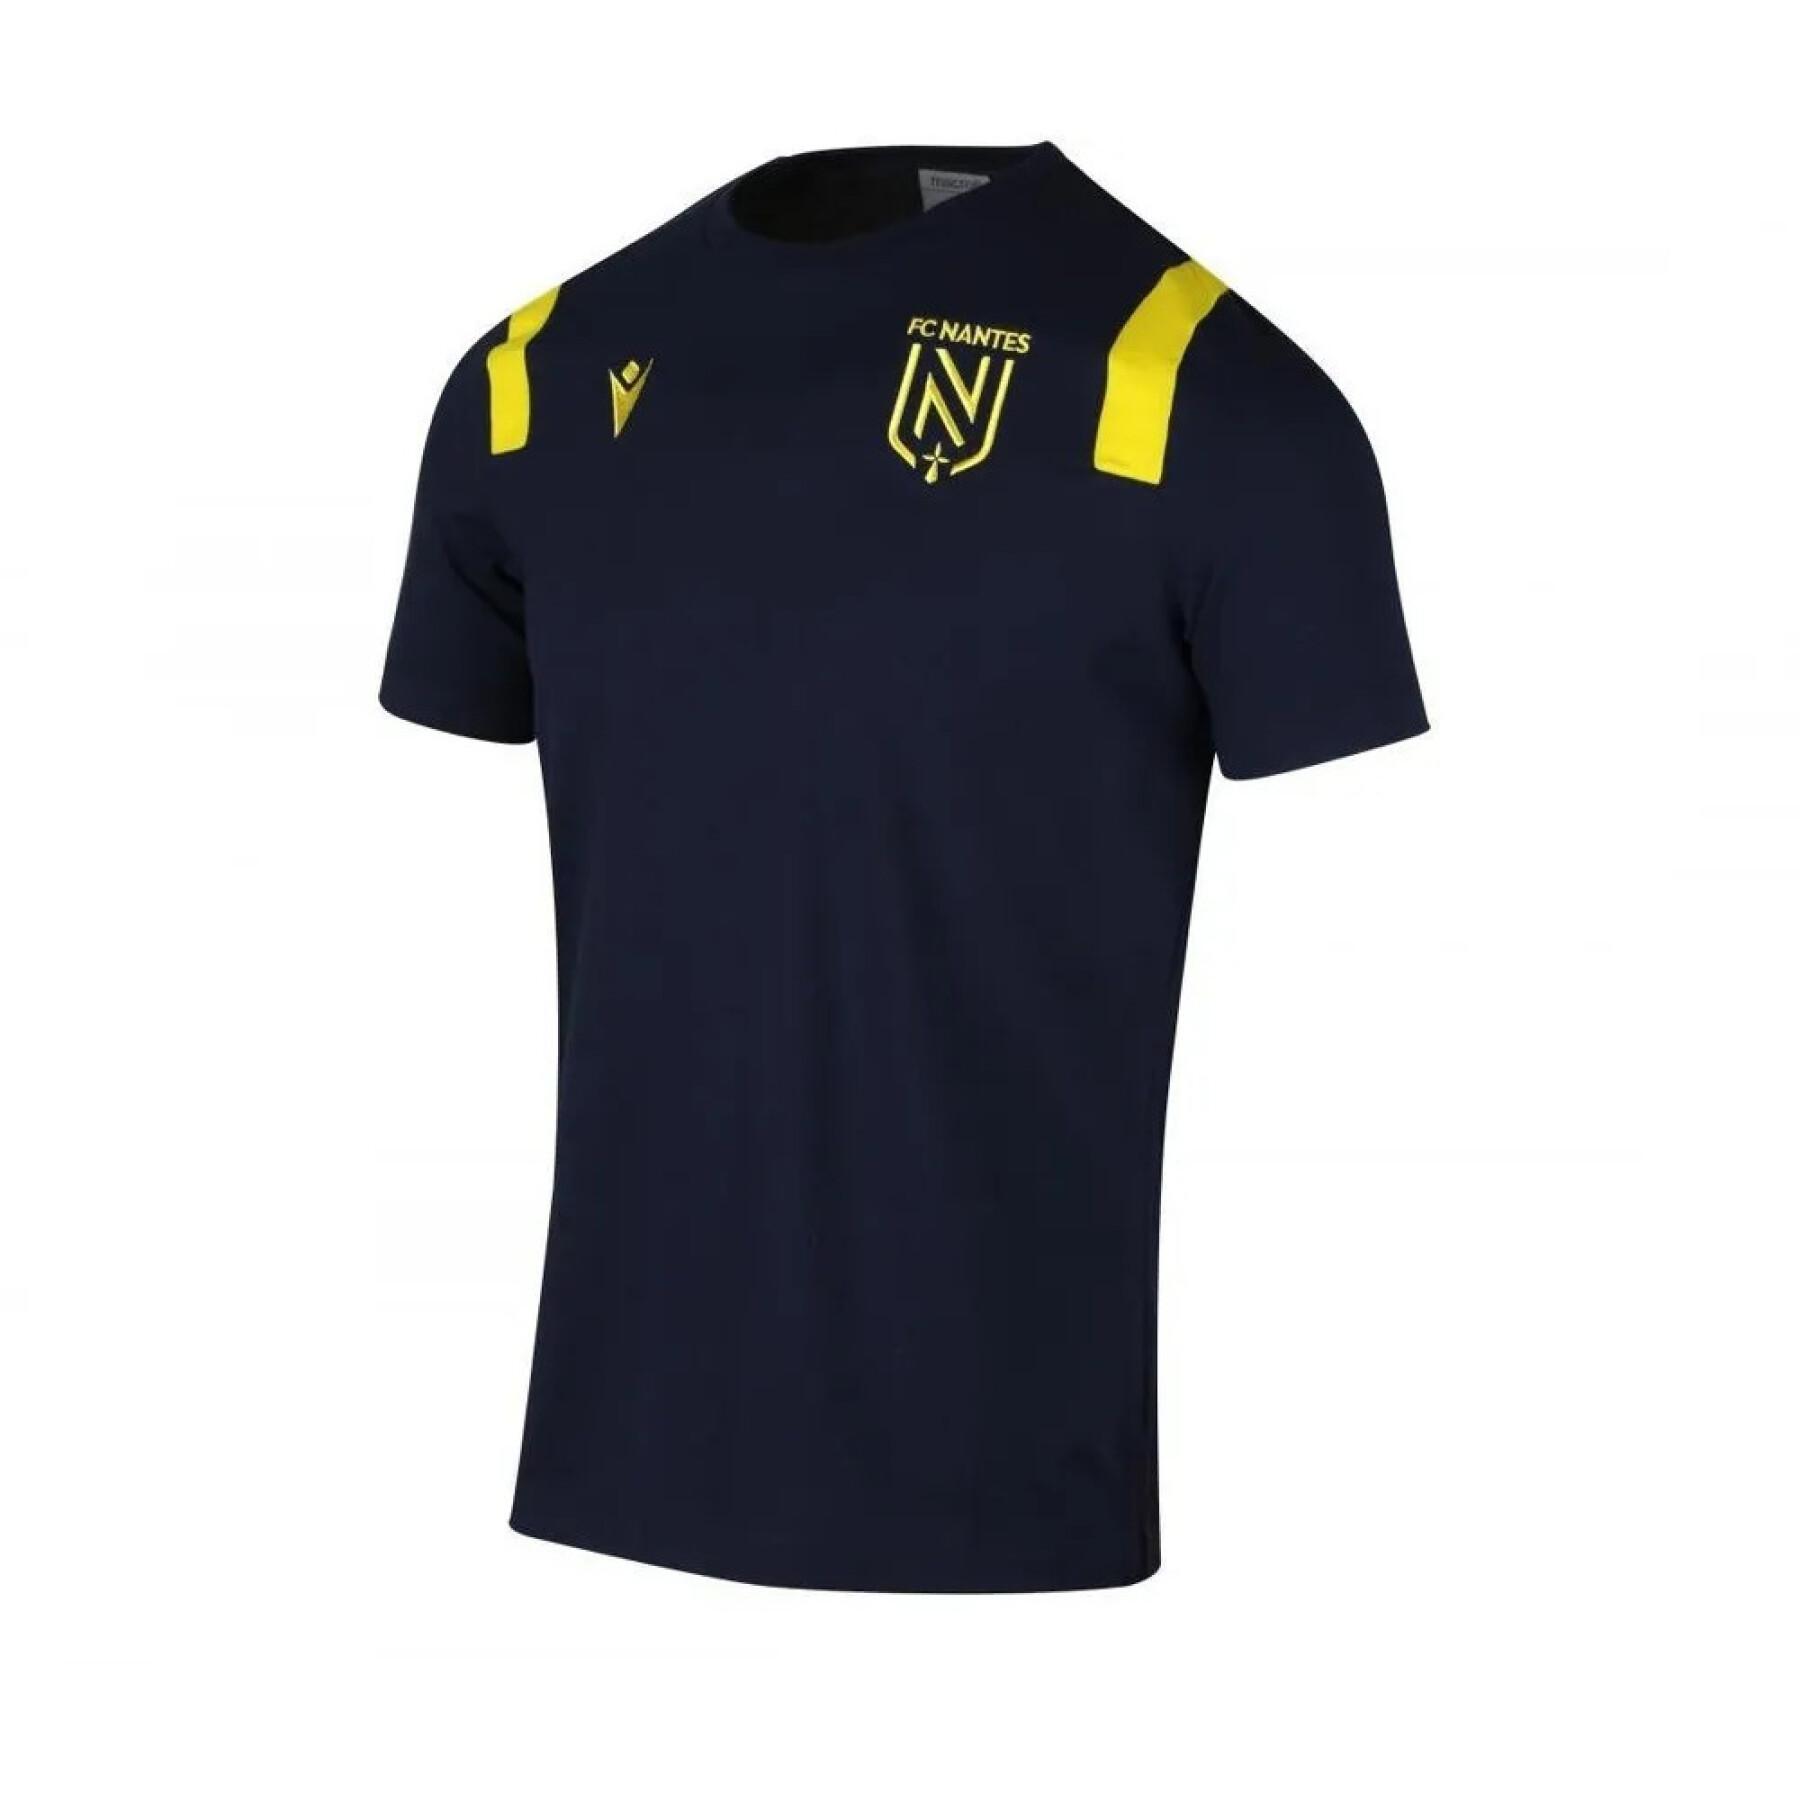 Camiseta infantil FC Nantes 2020/21